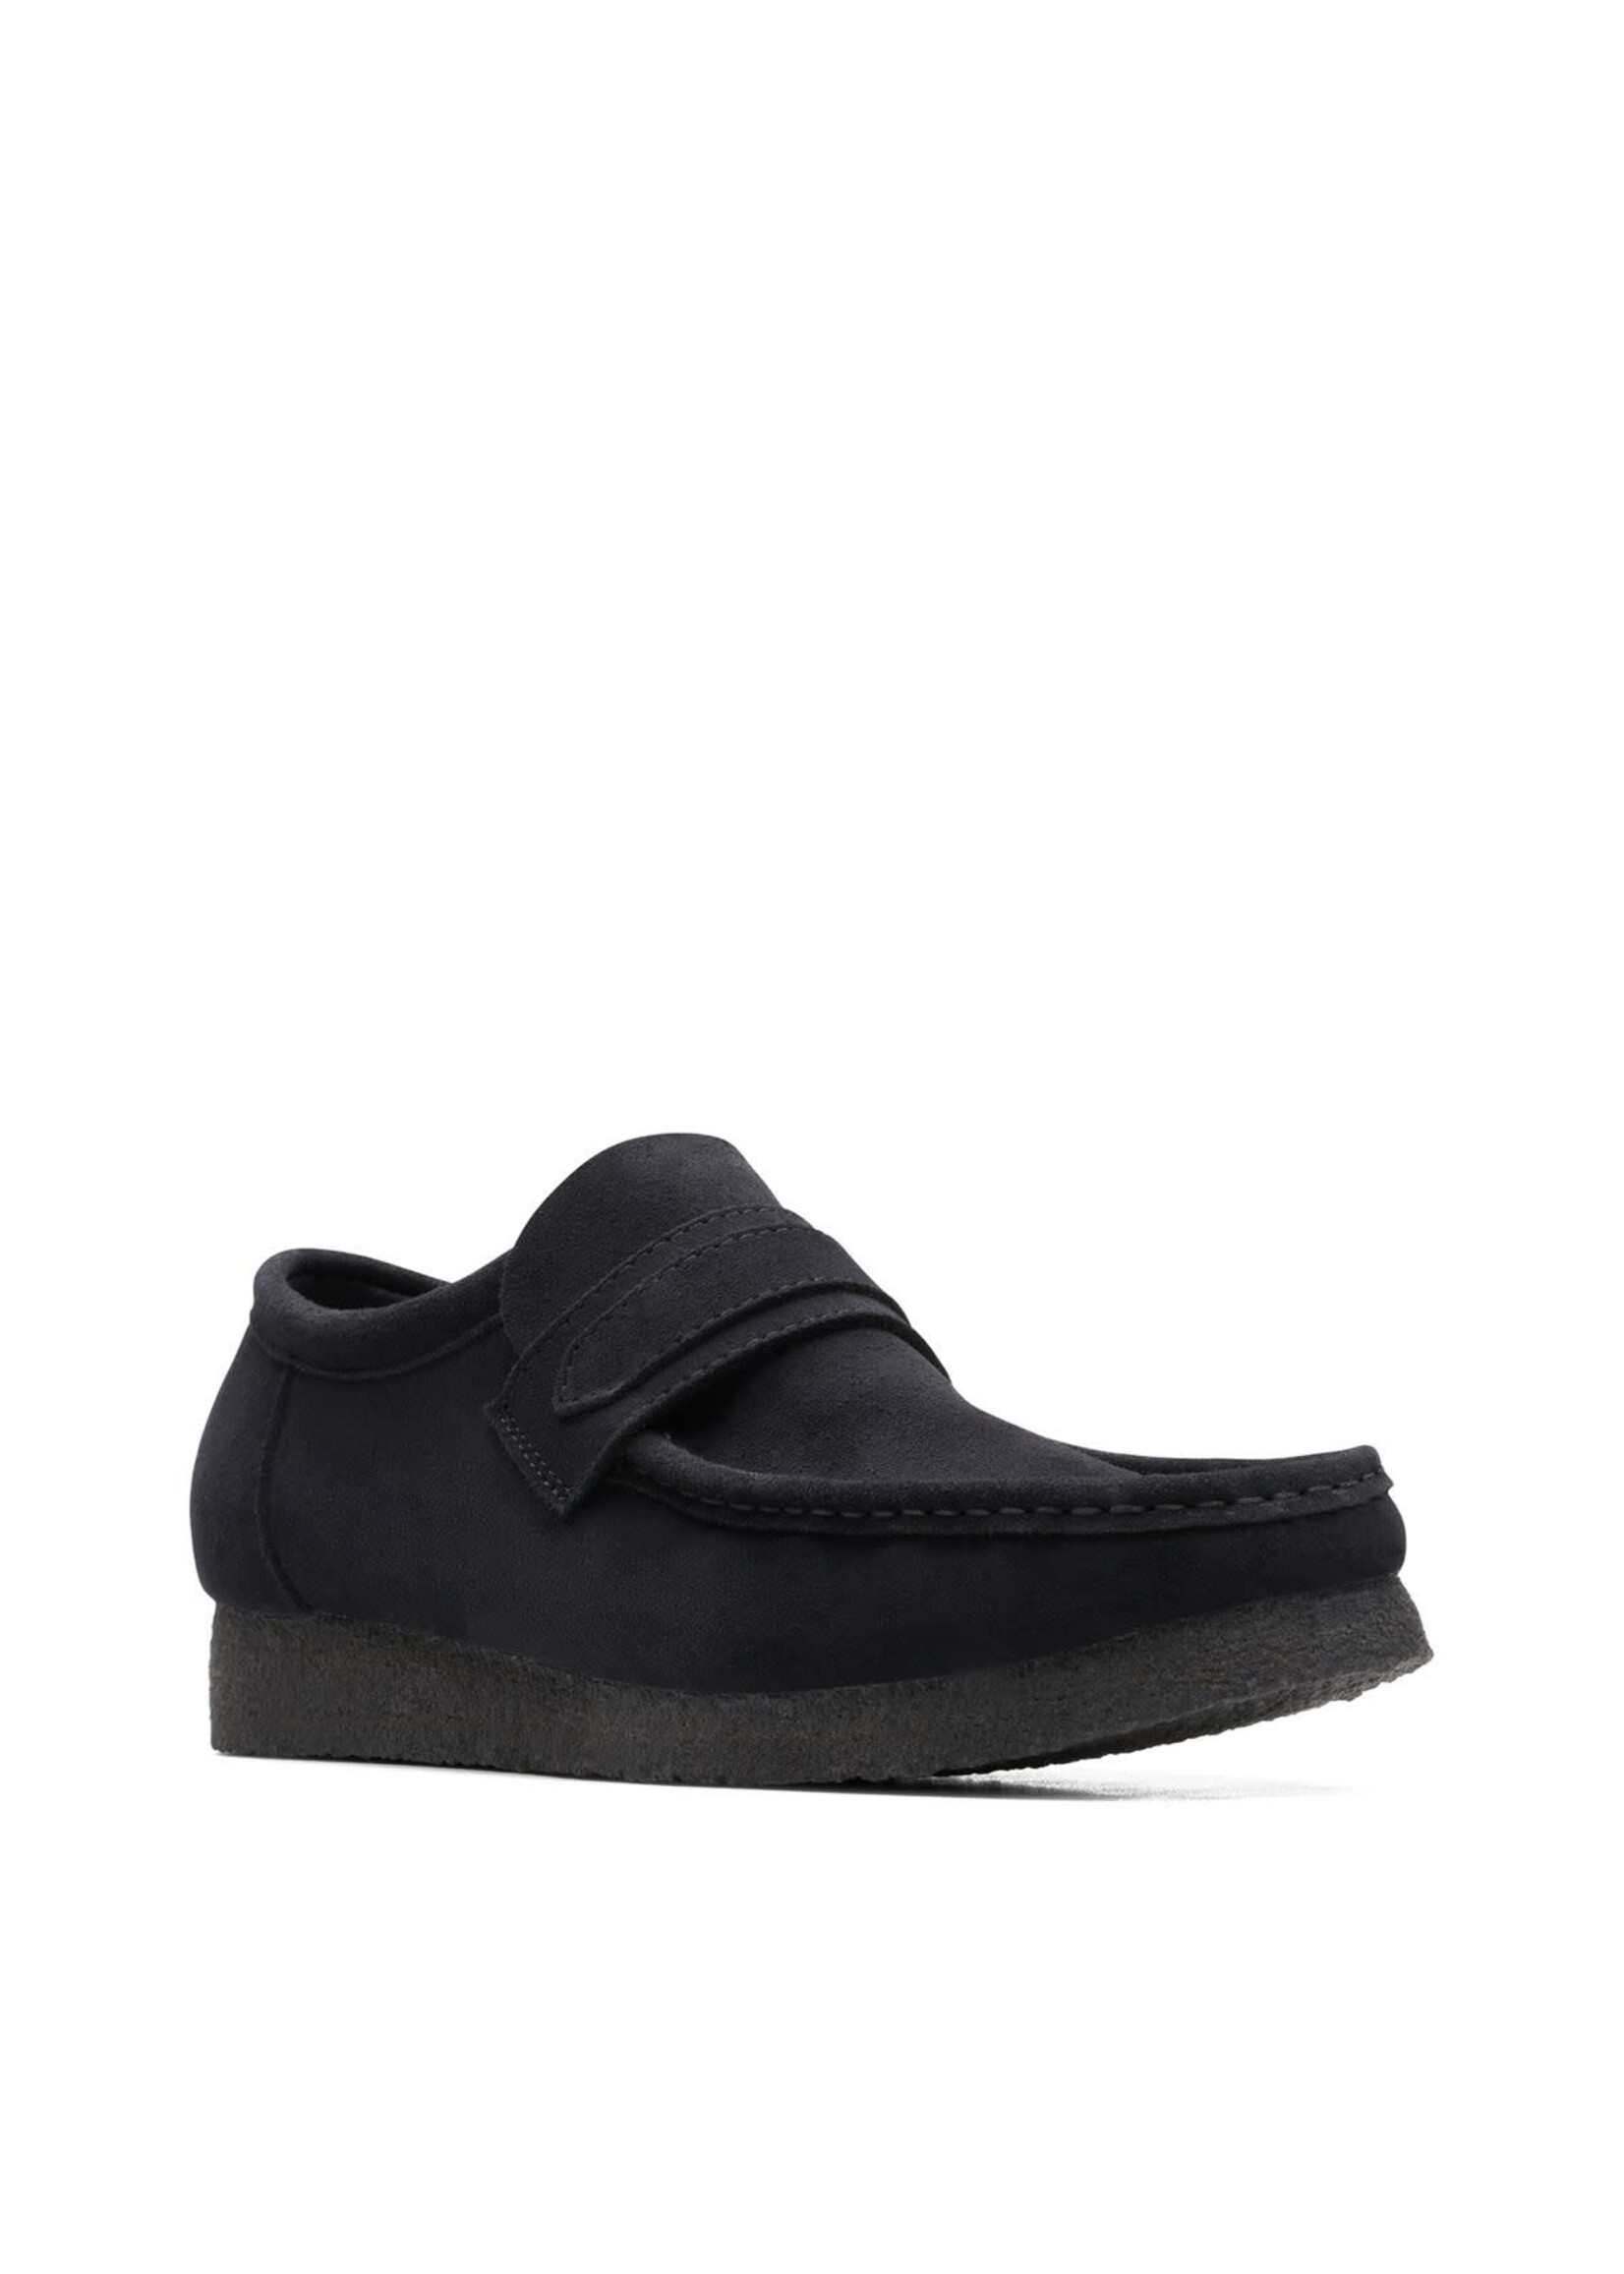 Clarks Mens Originals Wallabee Loafer Shoes Black Suede | 26172503